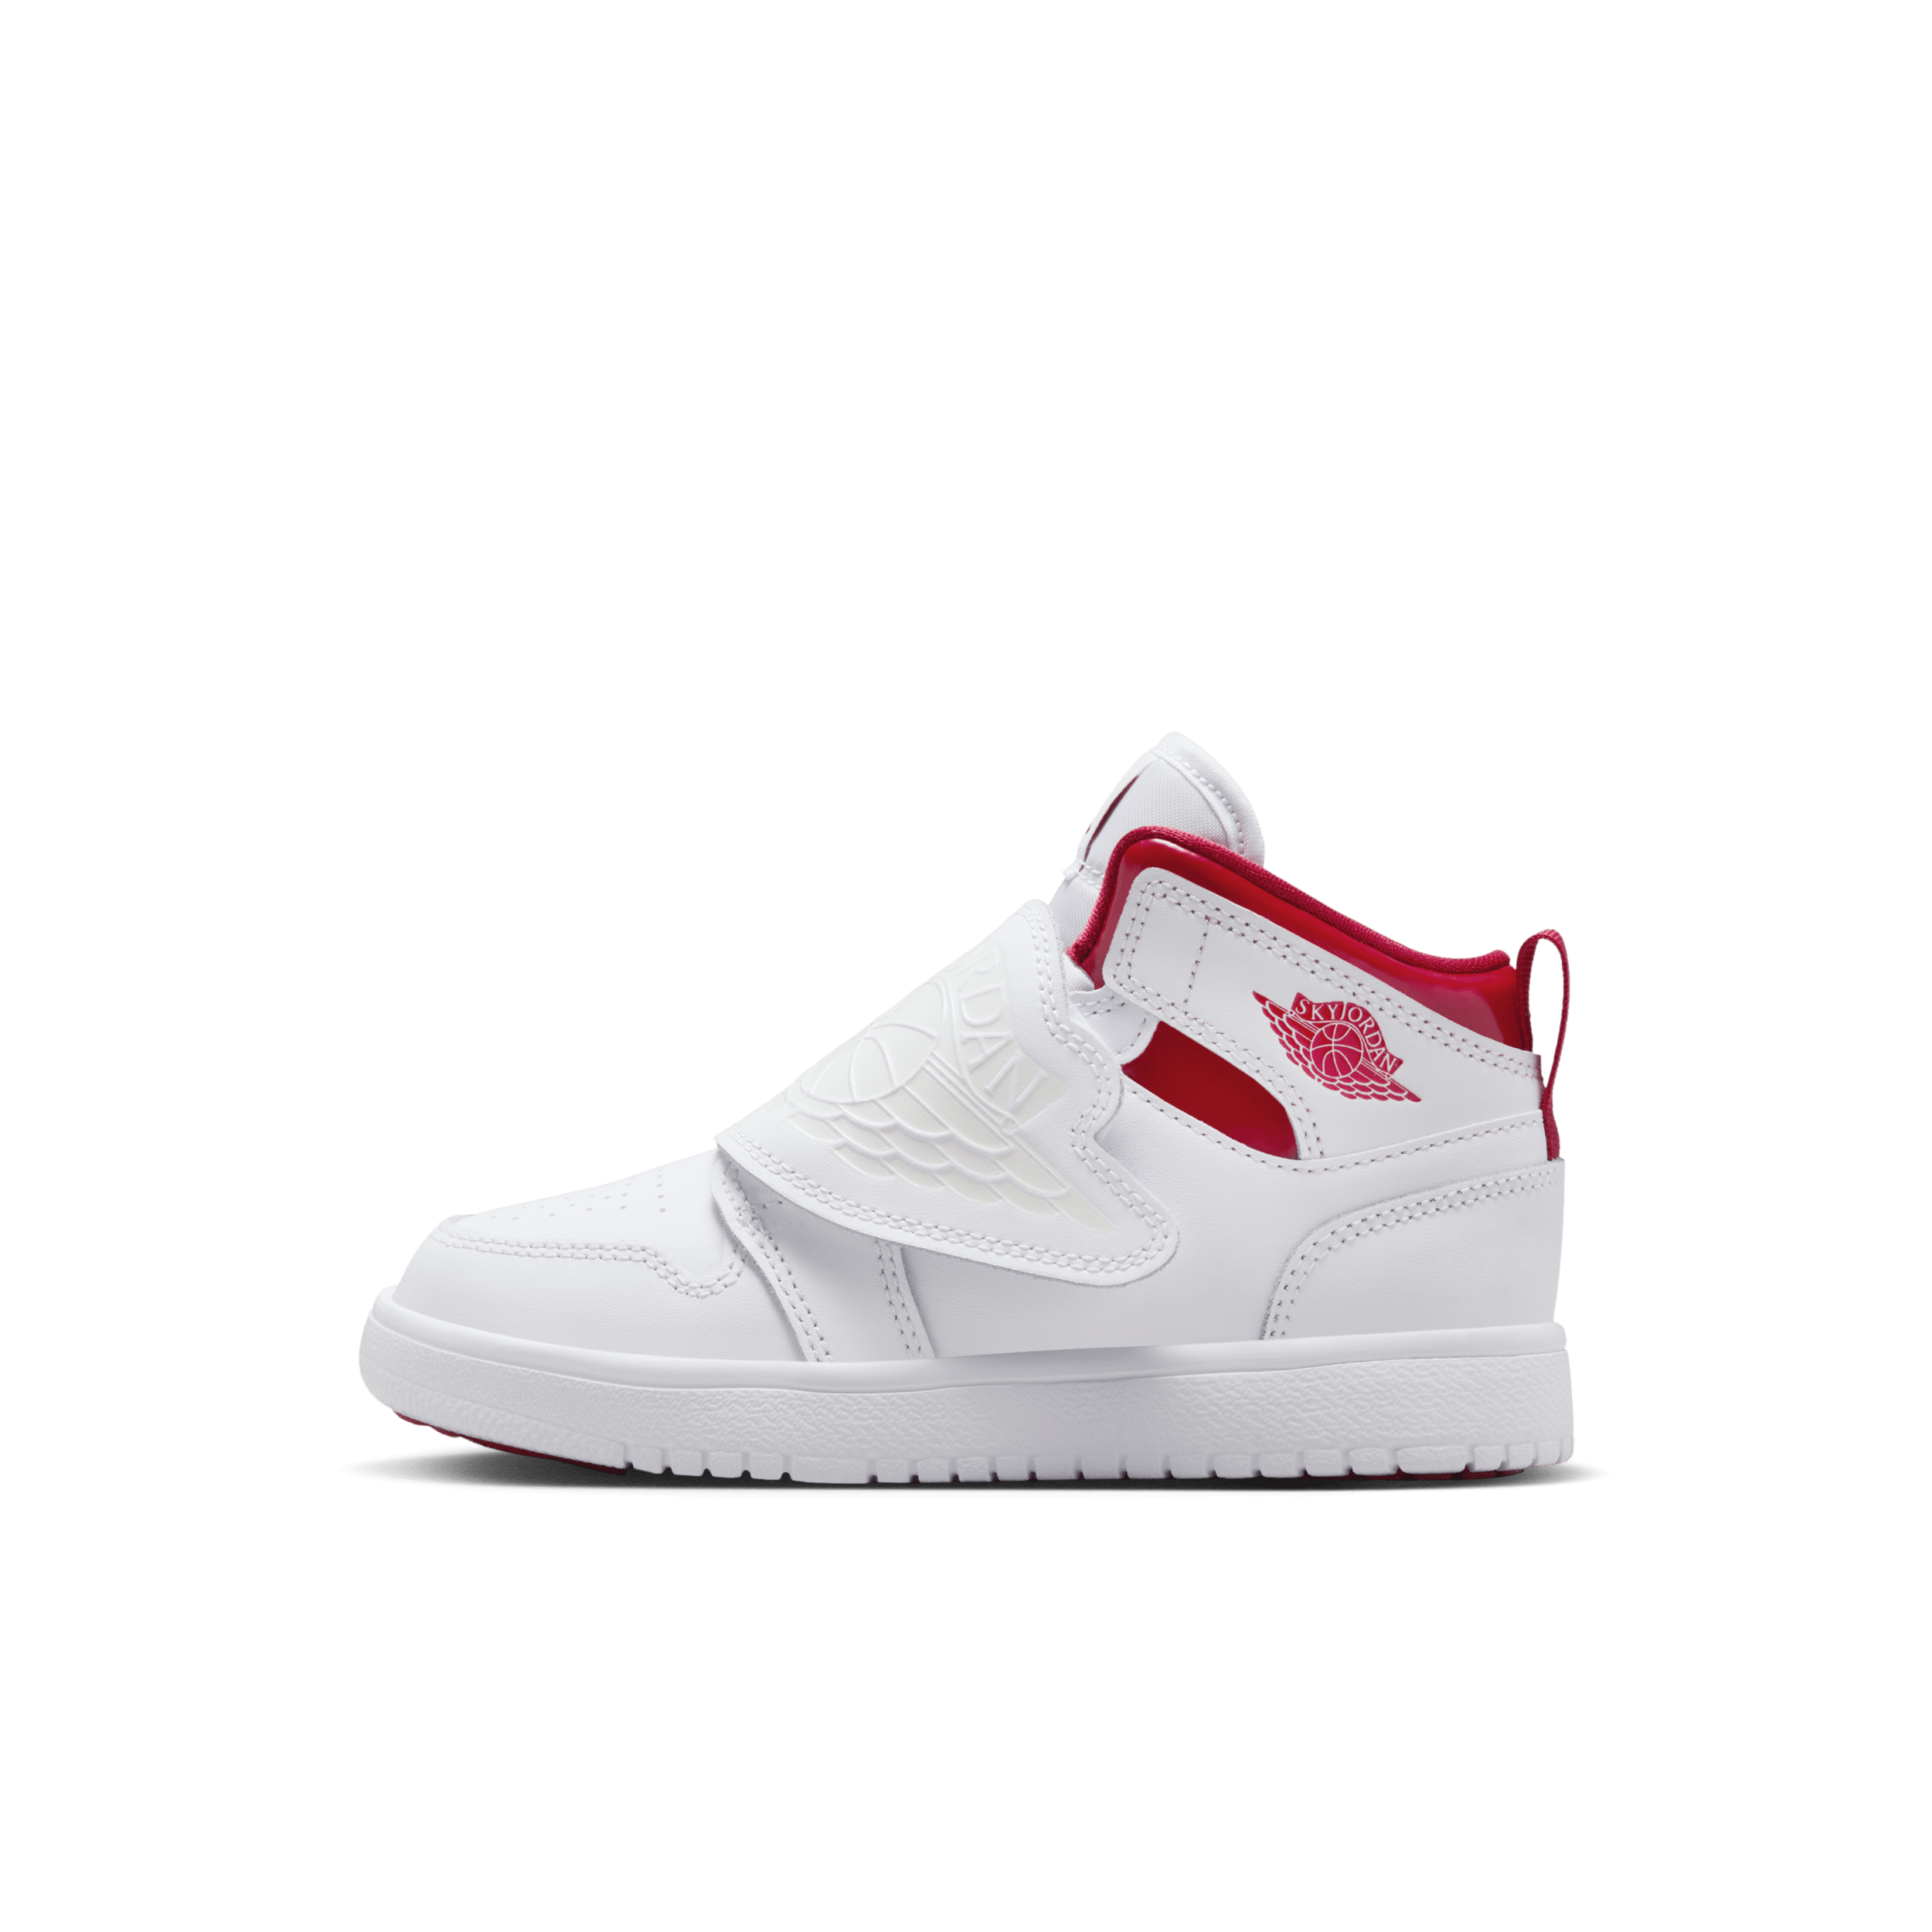 Nike Sky Jordan 1-sko til små børn - hvid